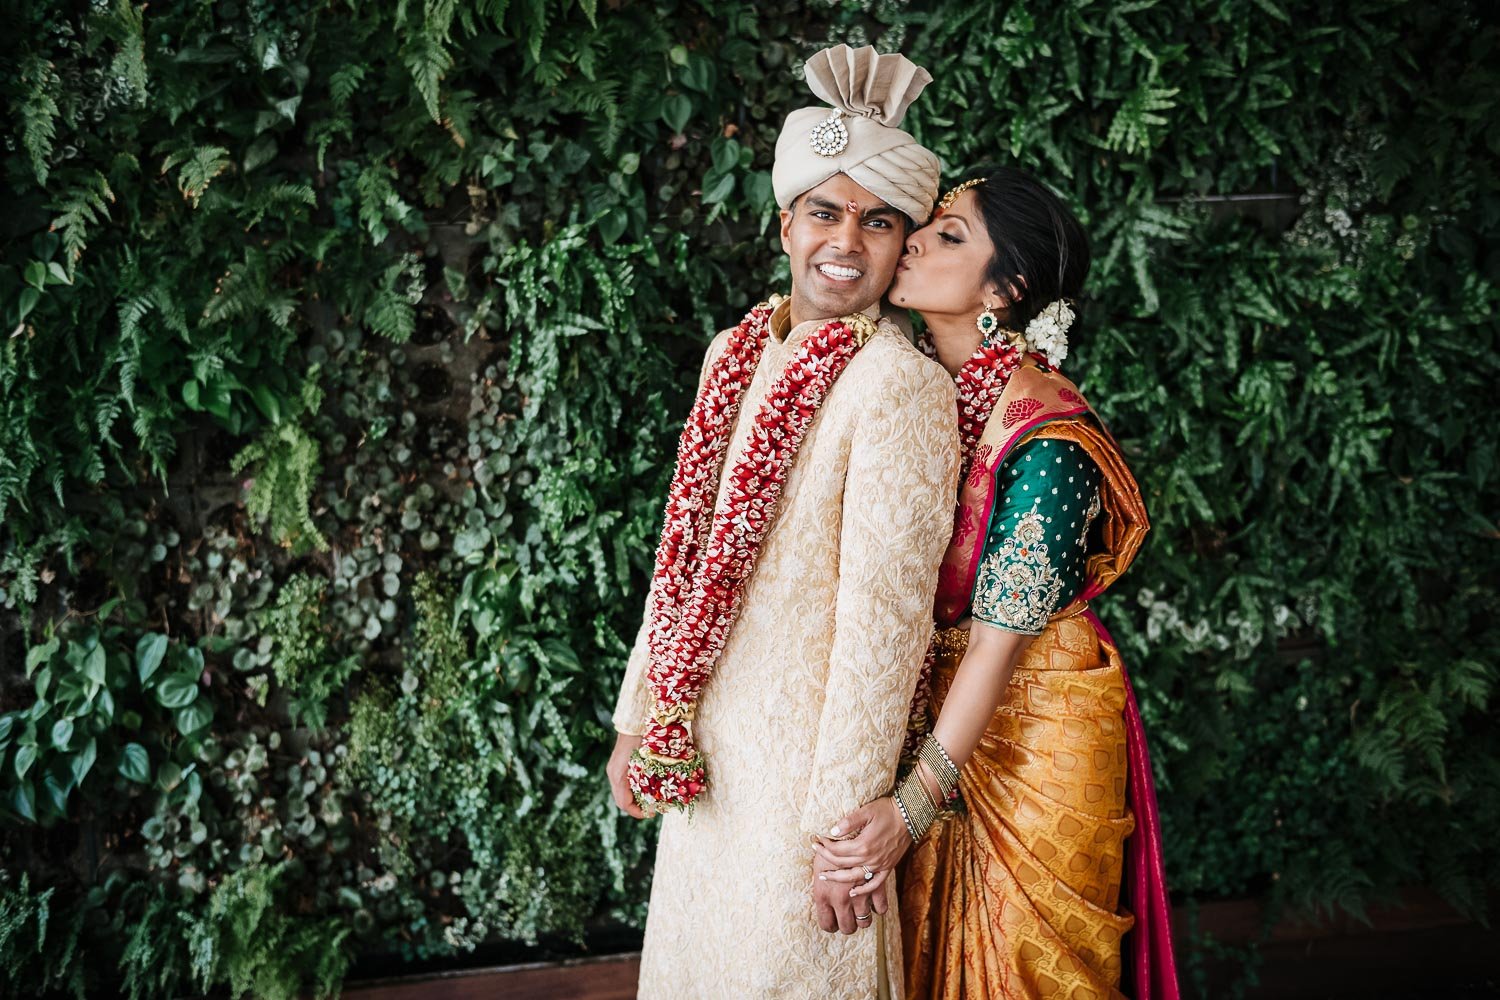 Brazos Hall couple marry - south asian Hindu wedding bride kisses groom on cheek